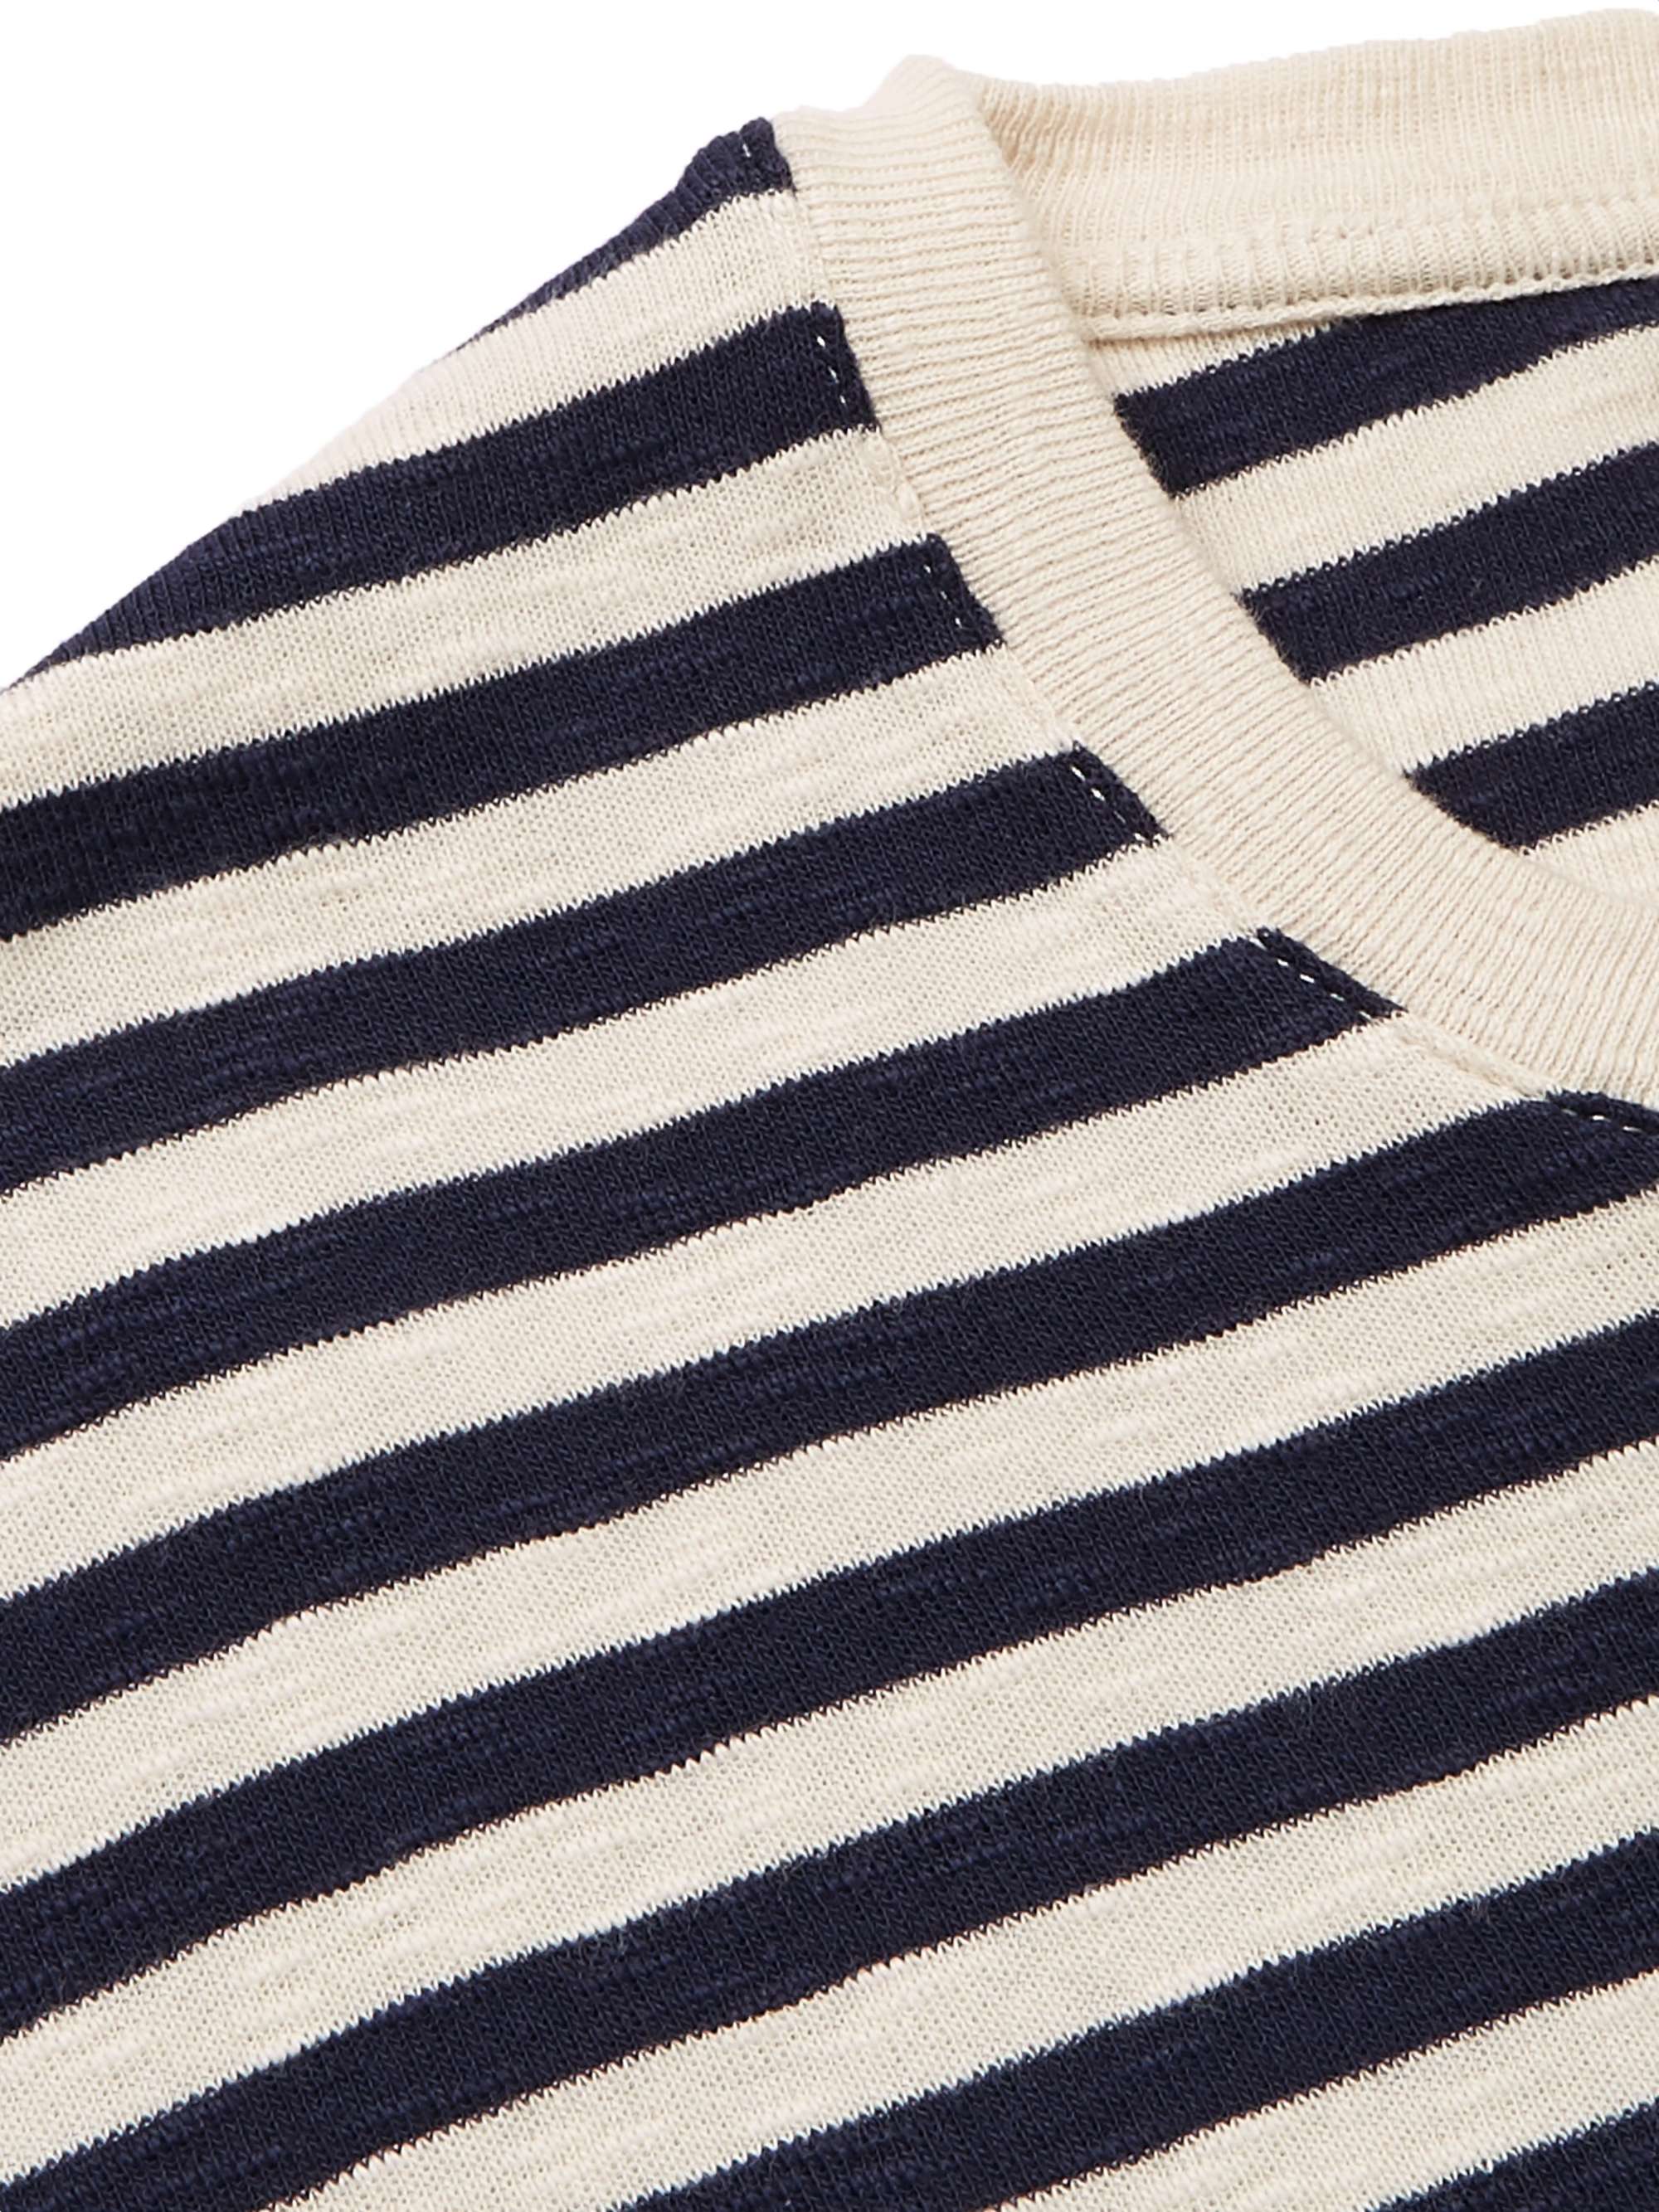 FOLK Striped Slub Cotton-Jersey T-Shirt